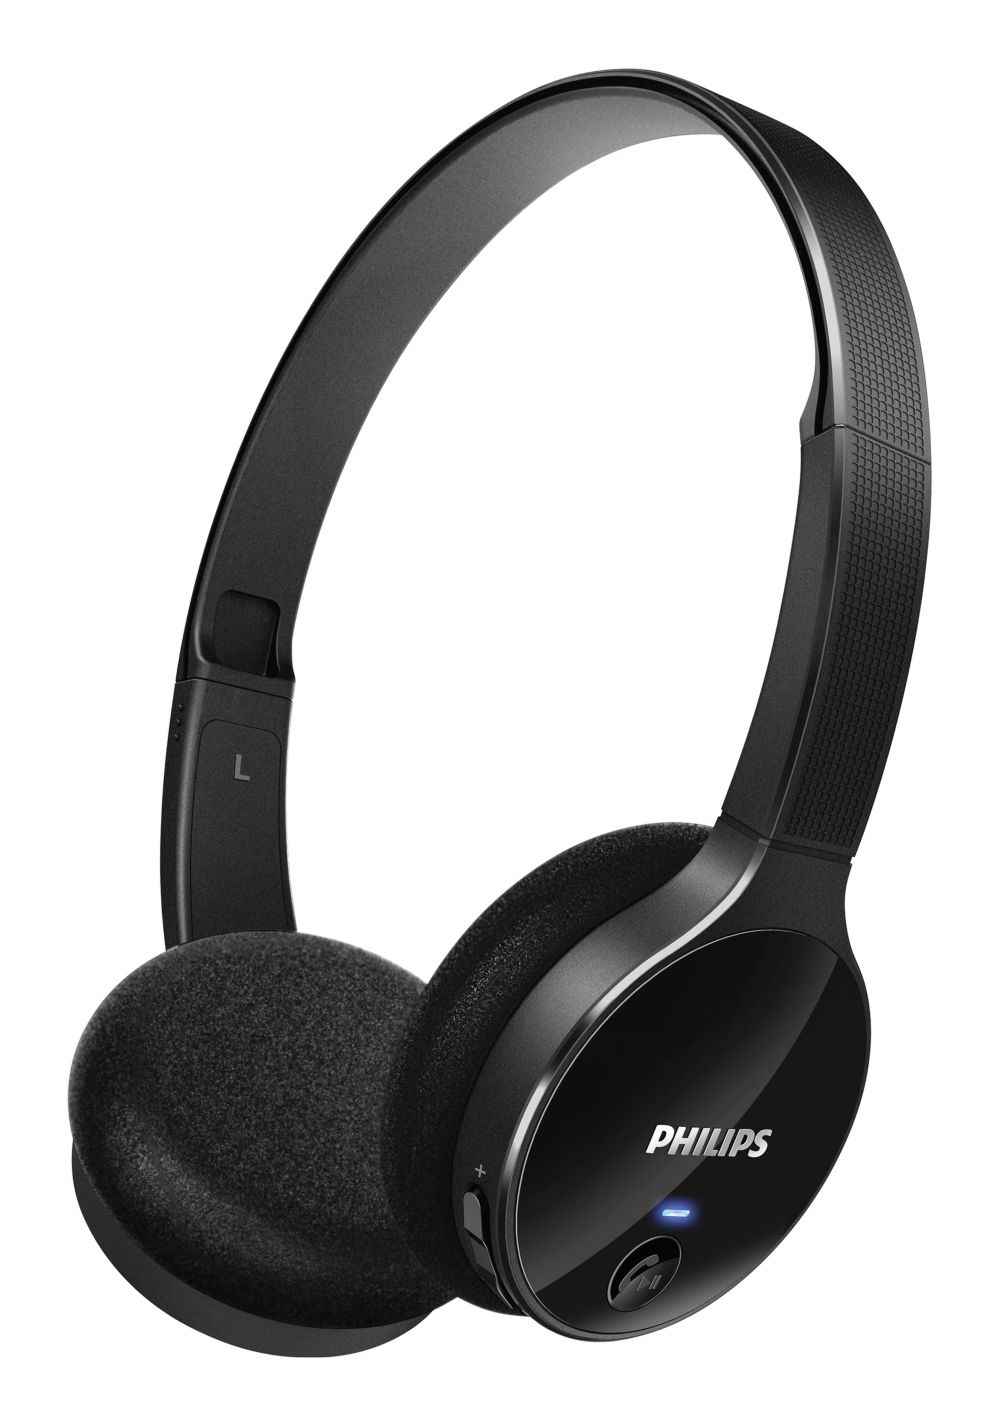 Philips Shb4000 On-ear Black Bluetooth Stereo Headset